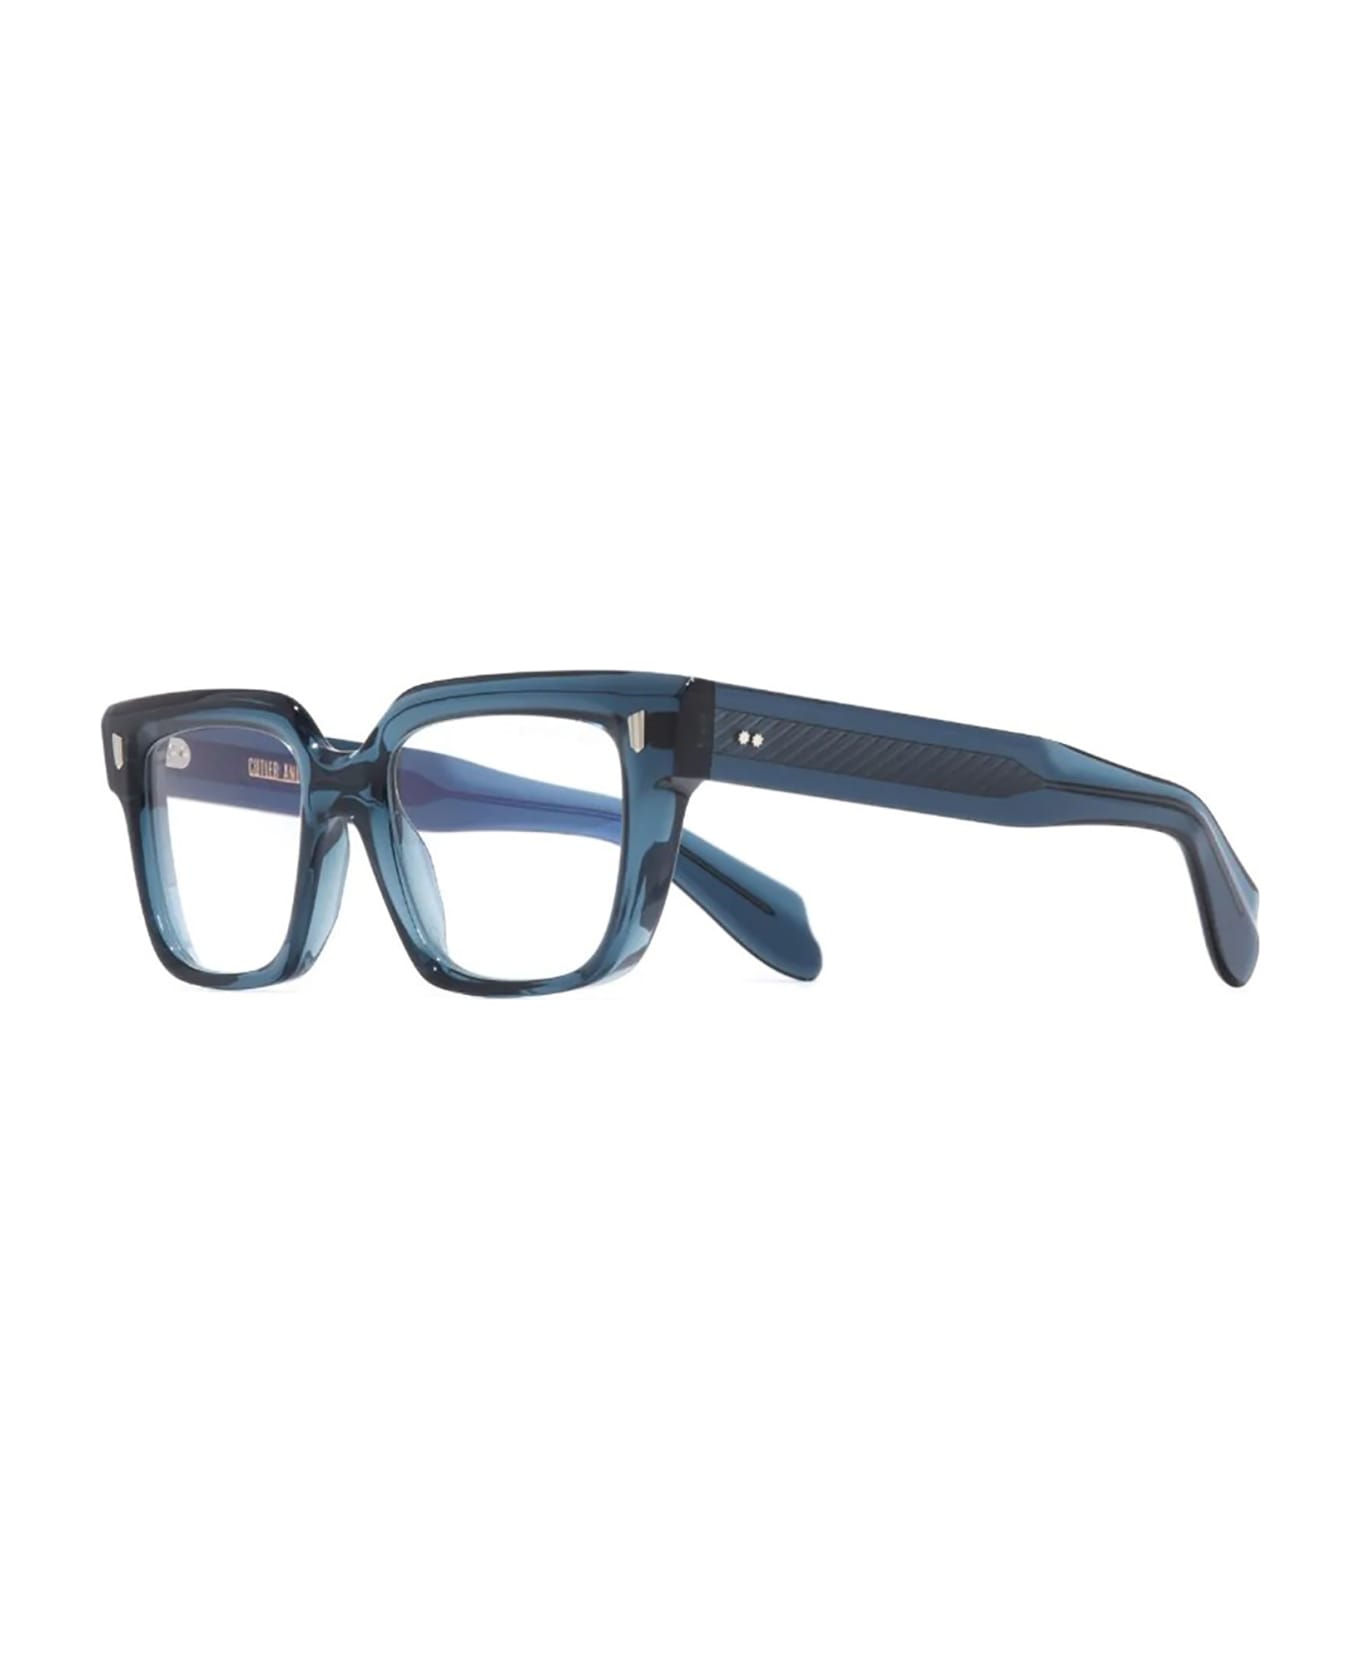 Cutler and Gross 9347 Eyewear - Deep Blue Crystal アイウェア